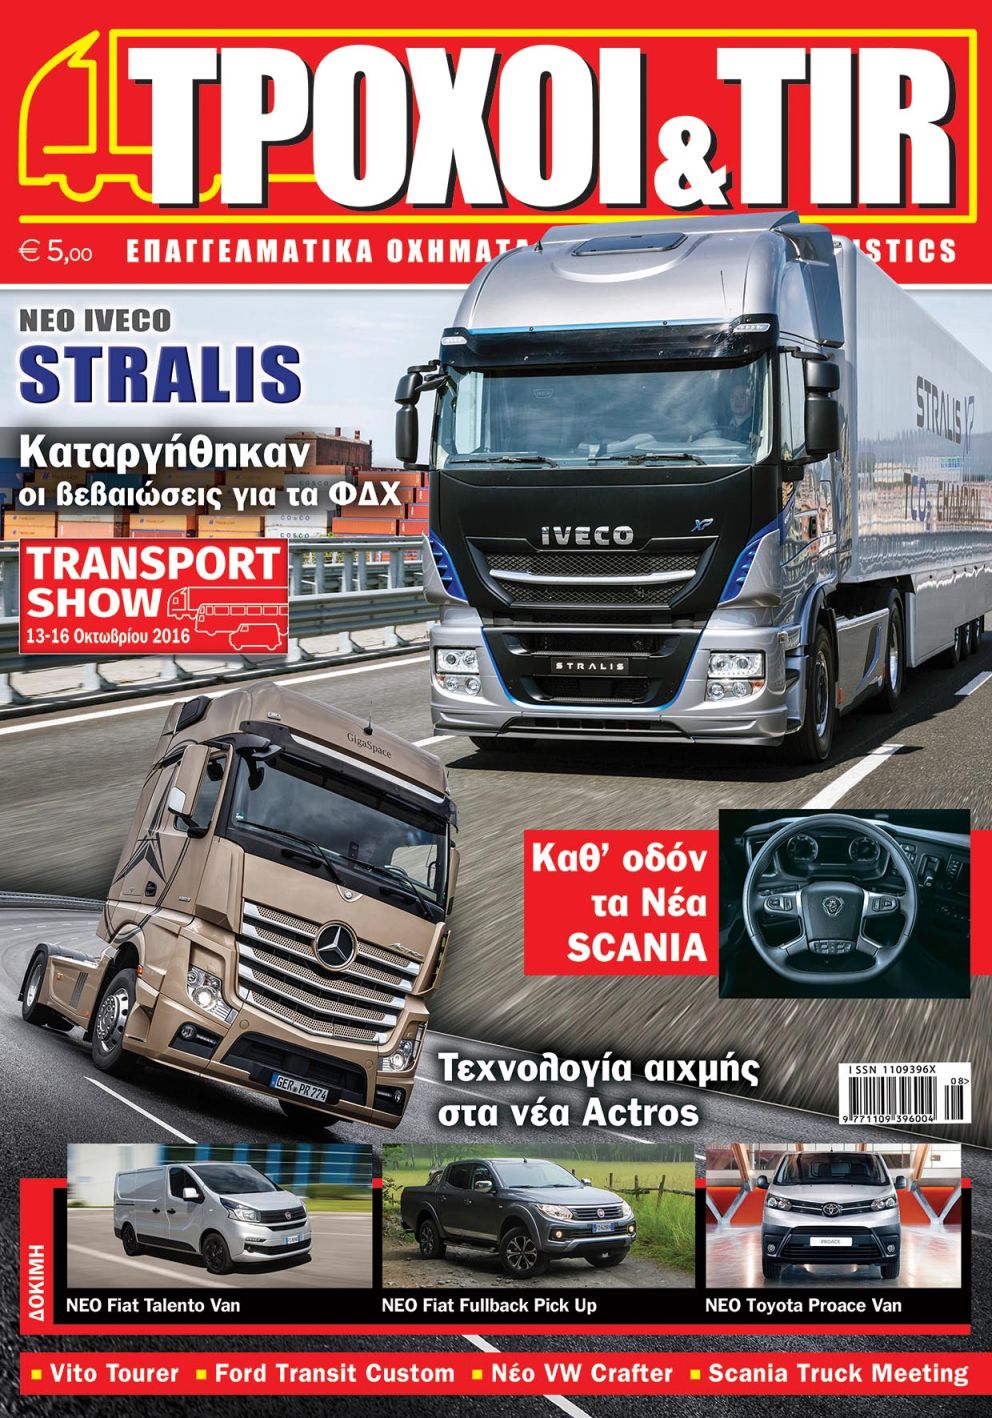 Troxoikaitir issue 340 august 2016 cover